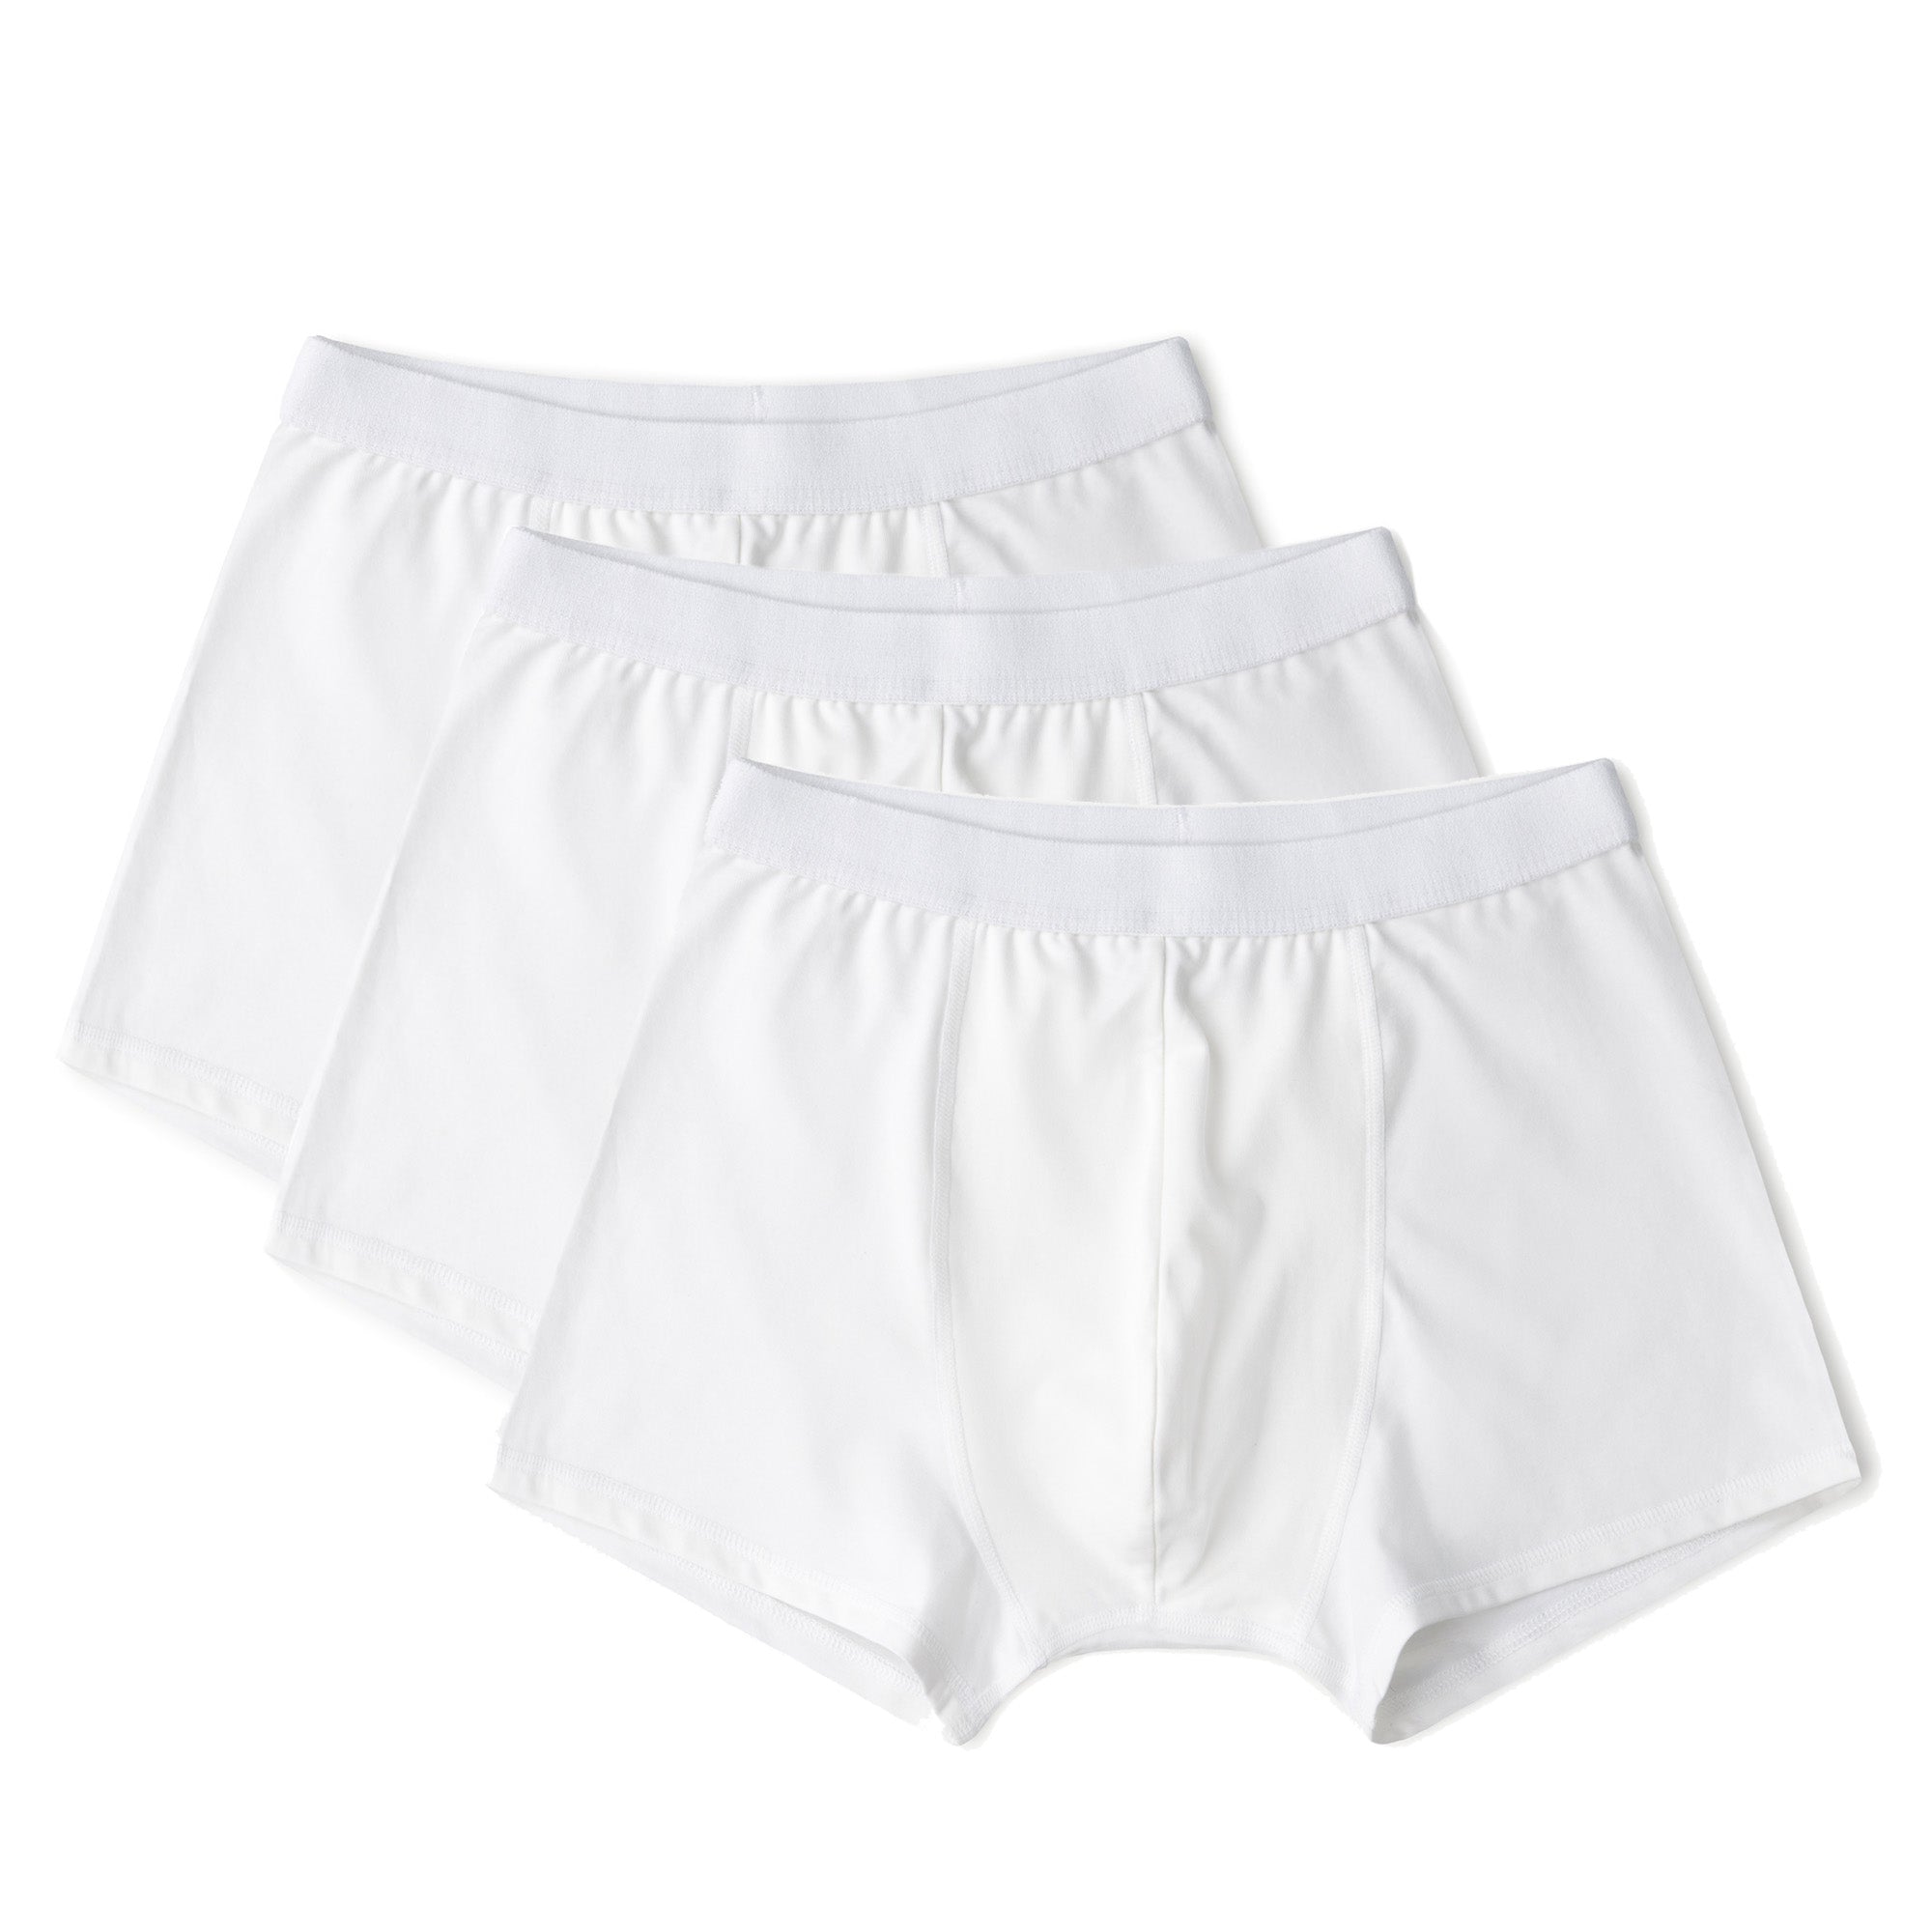 Cat & Jack Boys Underwear Multi-Packs in Boys Multi-Packs